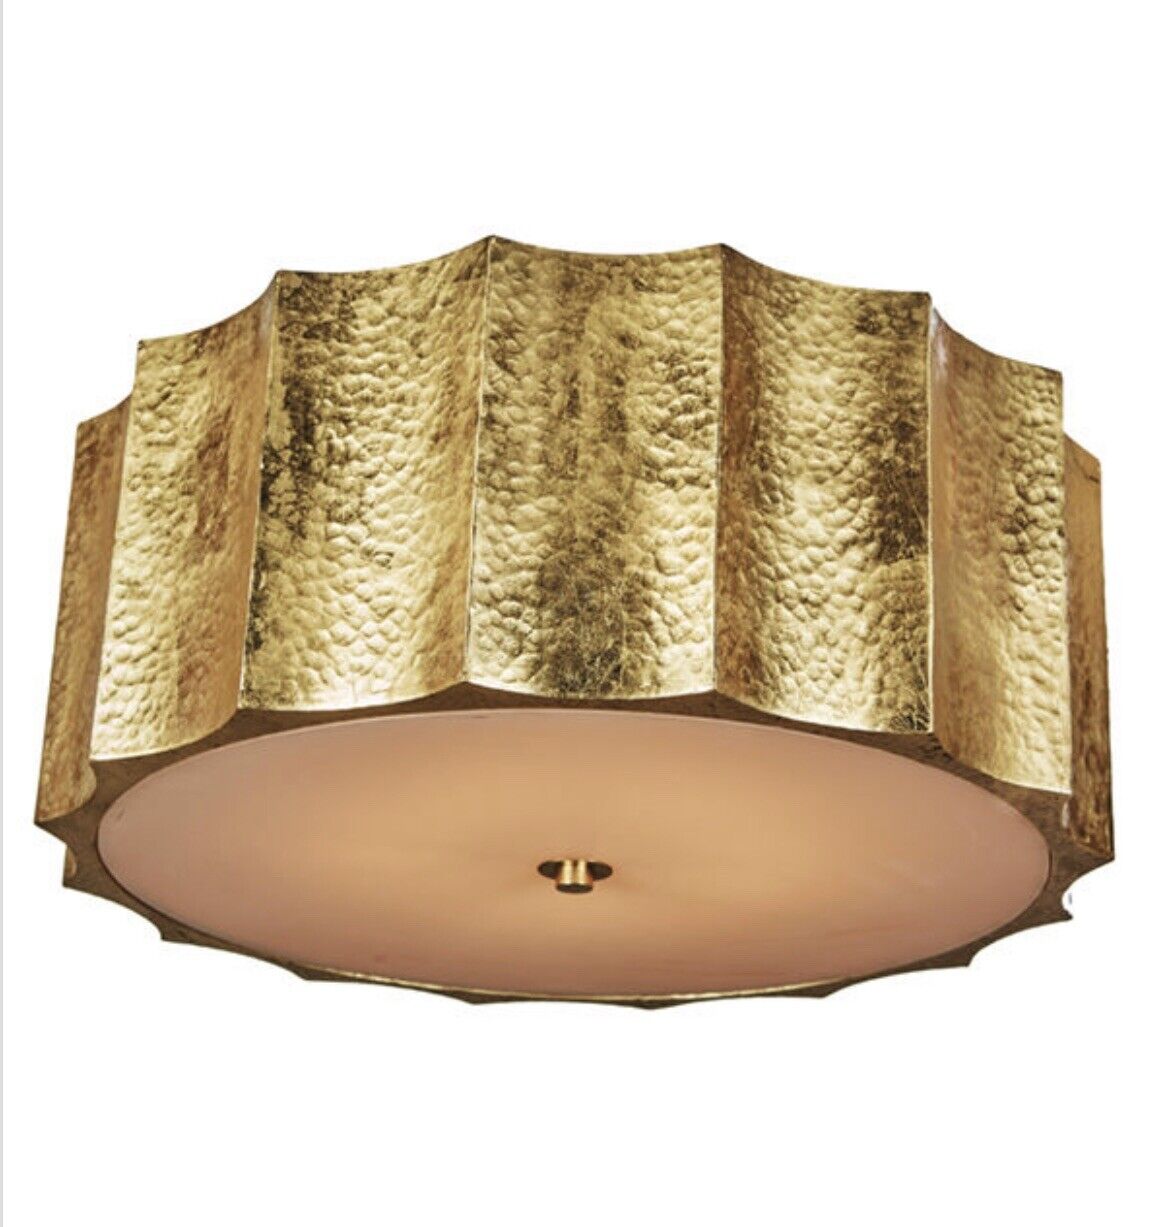 Aidan Gray Ceiling Light Flush Mount. Unique Gold Hammered Design.